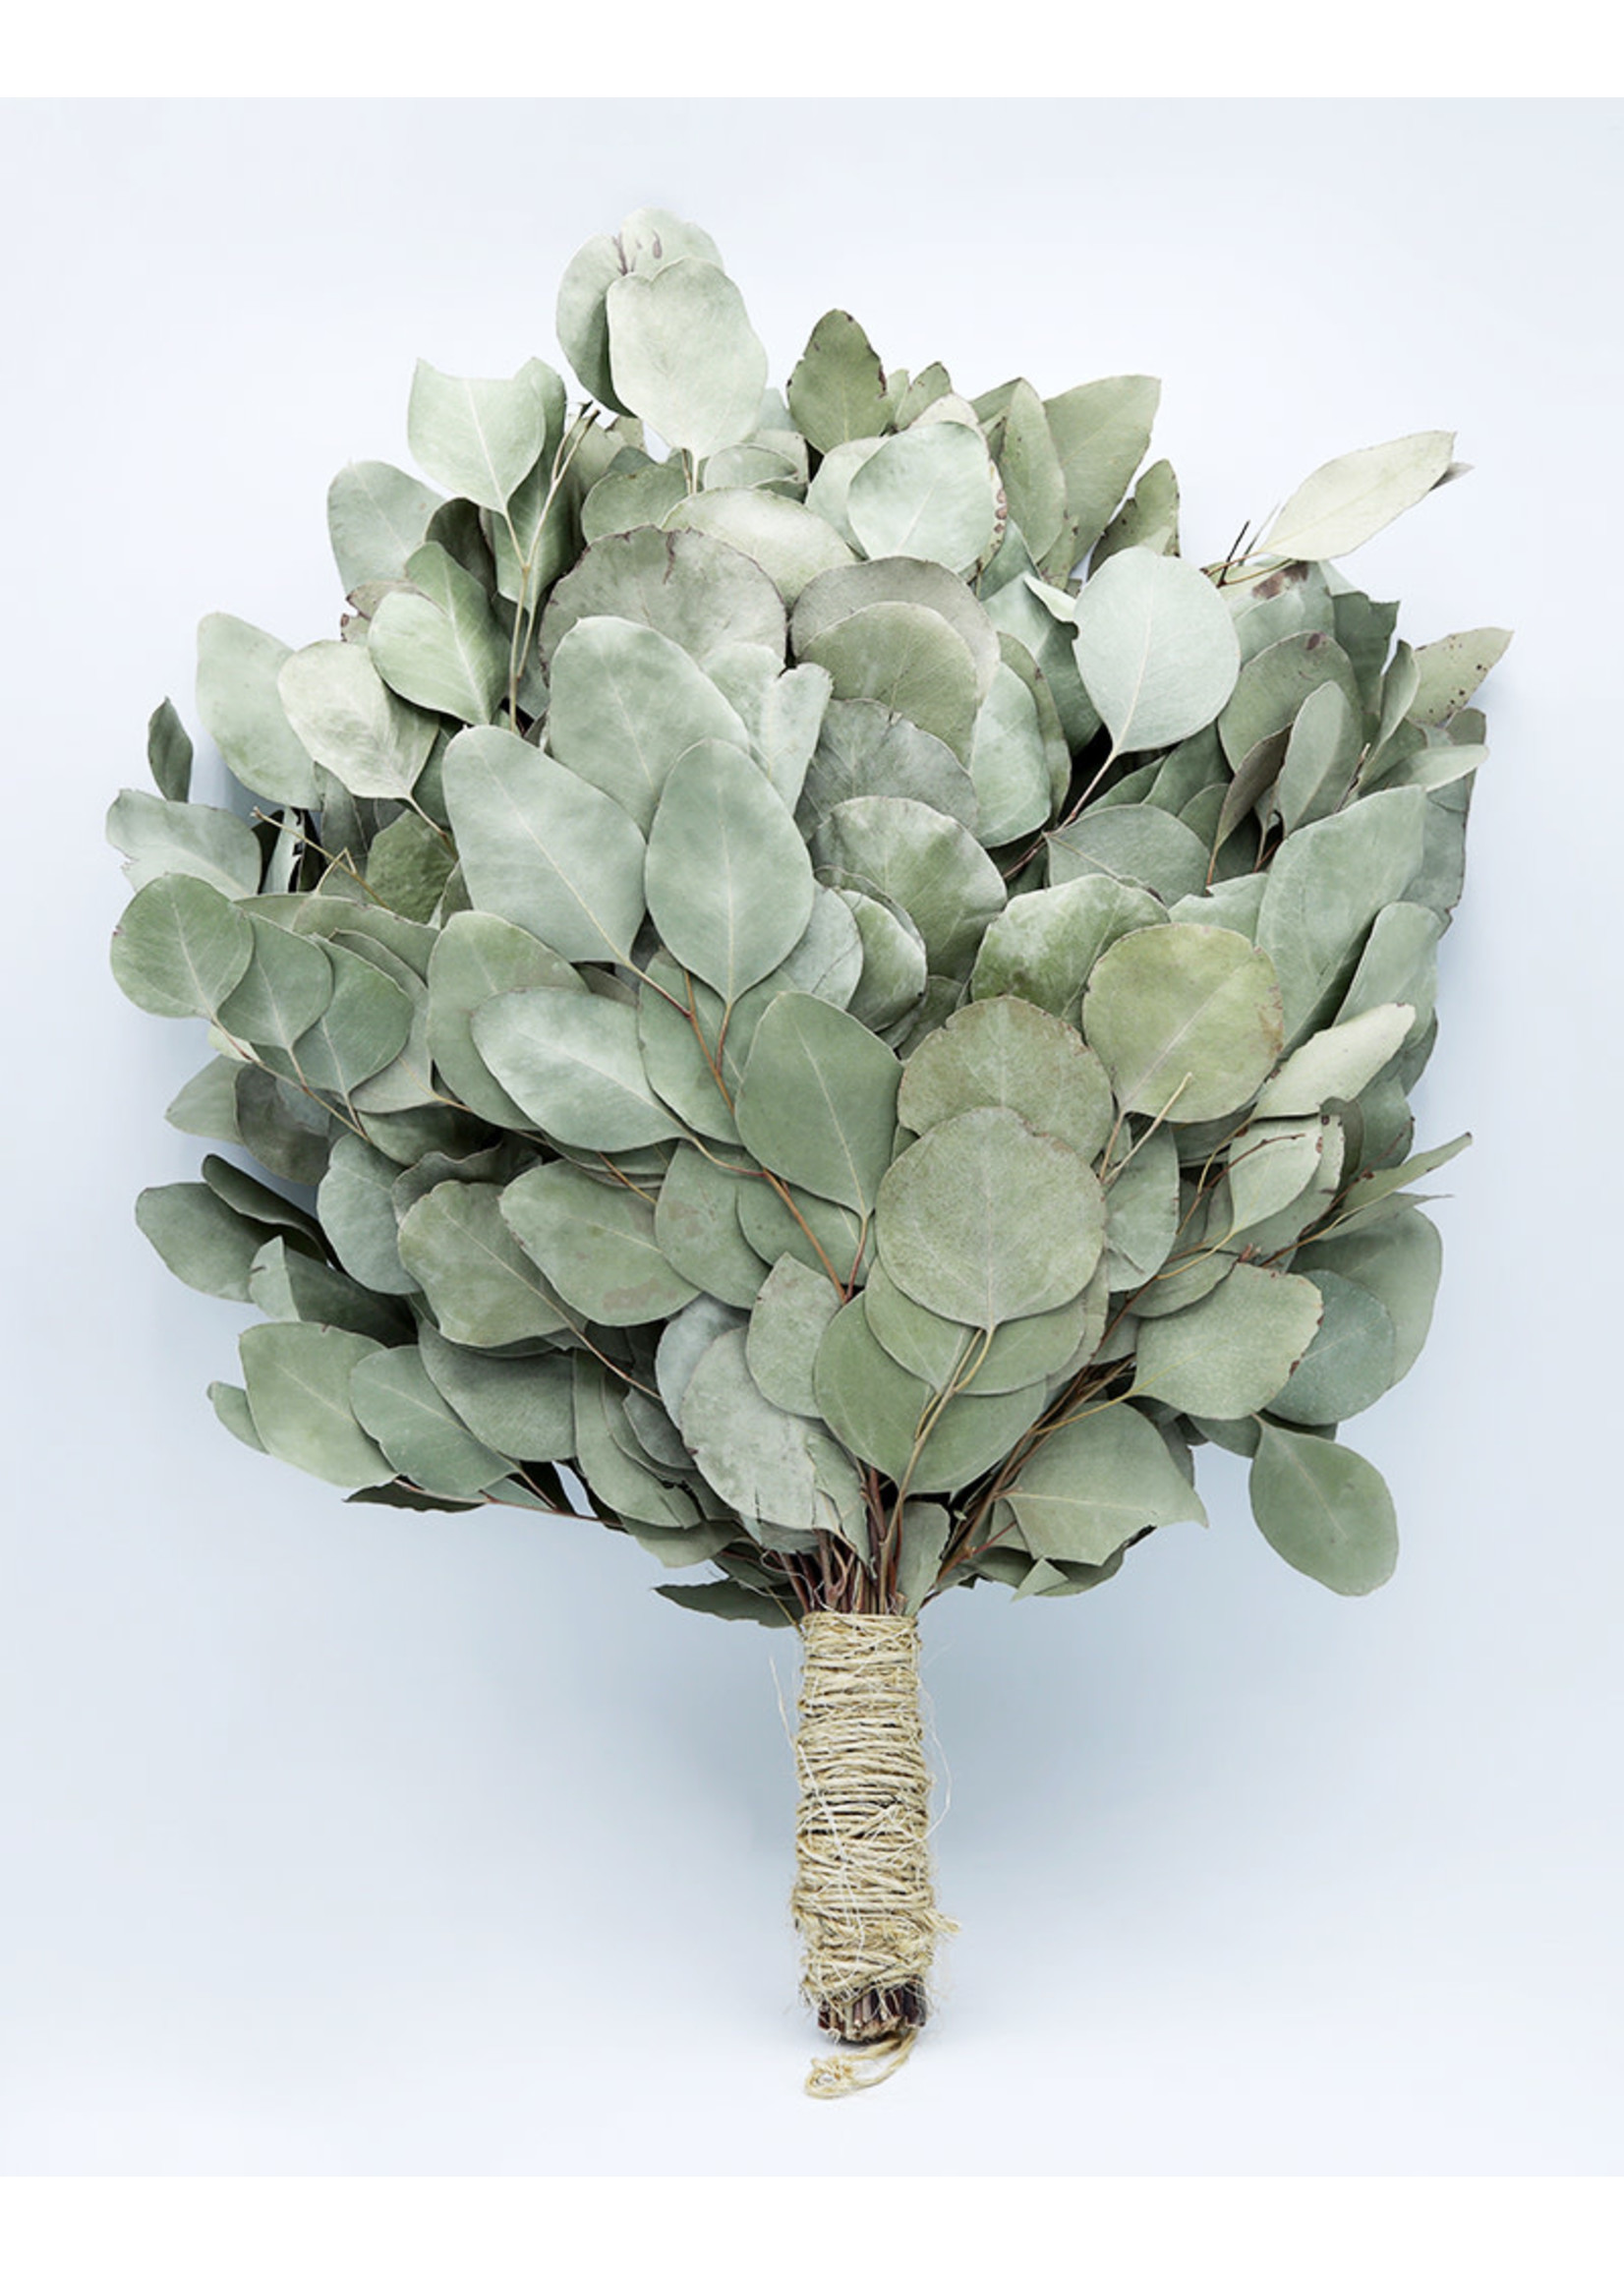 Venik for Banya (Eucalyptus)